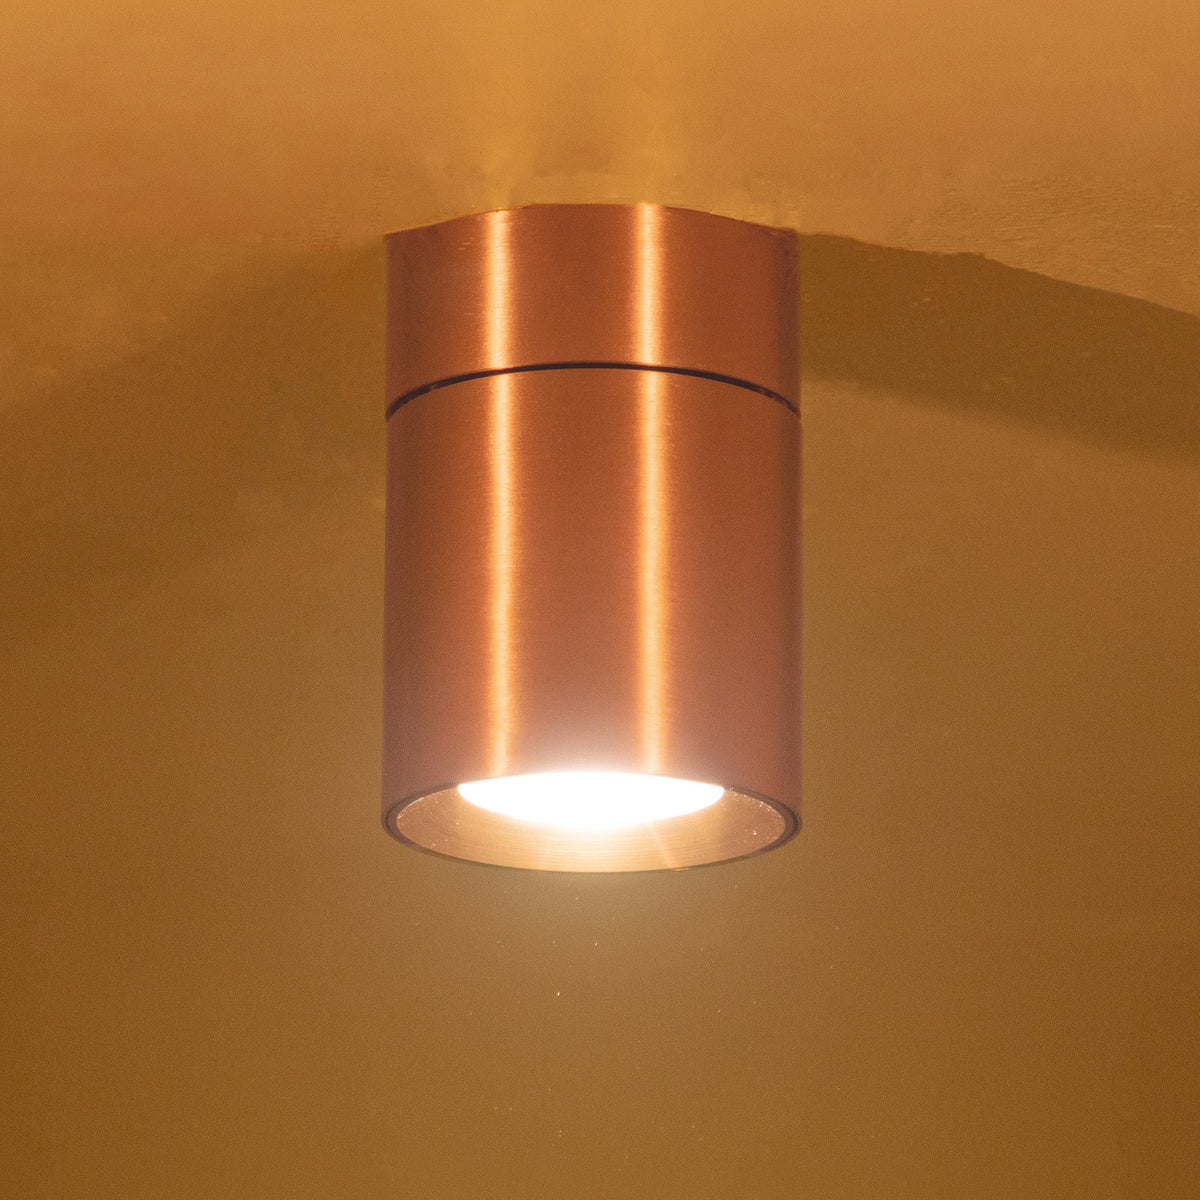 Buy Veyron Copper Adjustable LED Spot Light online